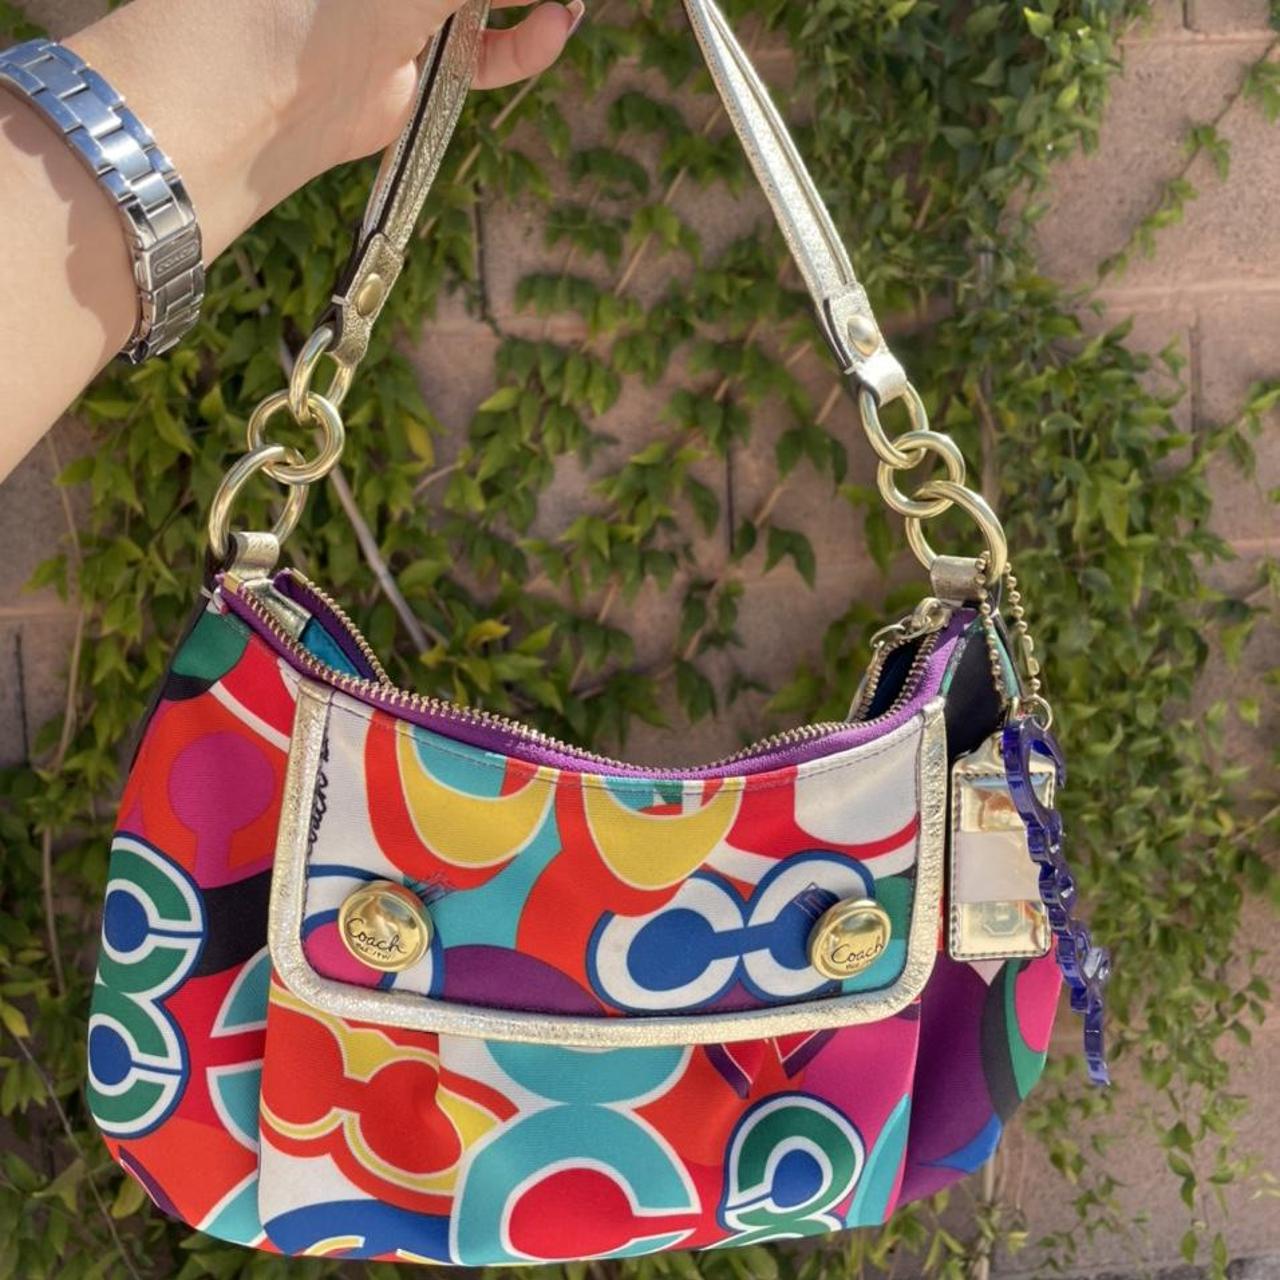 Mini Coach Poppy Multicolor Bag perfect pop to an... - Depop